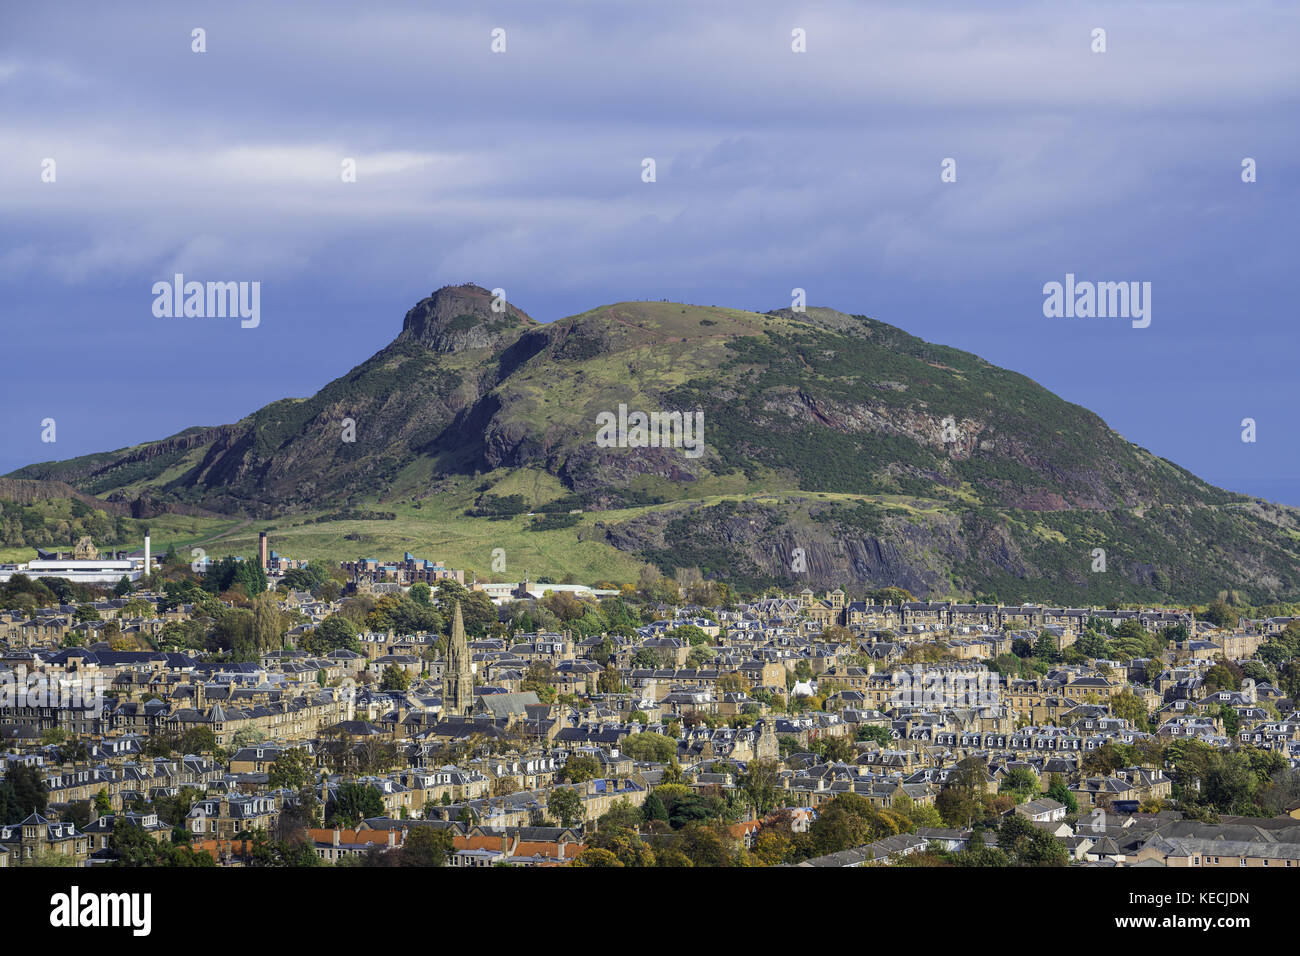 View of Arthur's Seat hill overlooking Edinburgh, Scotland, United Kingdom Stock Photo